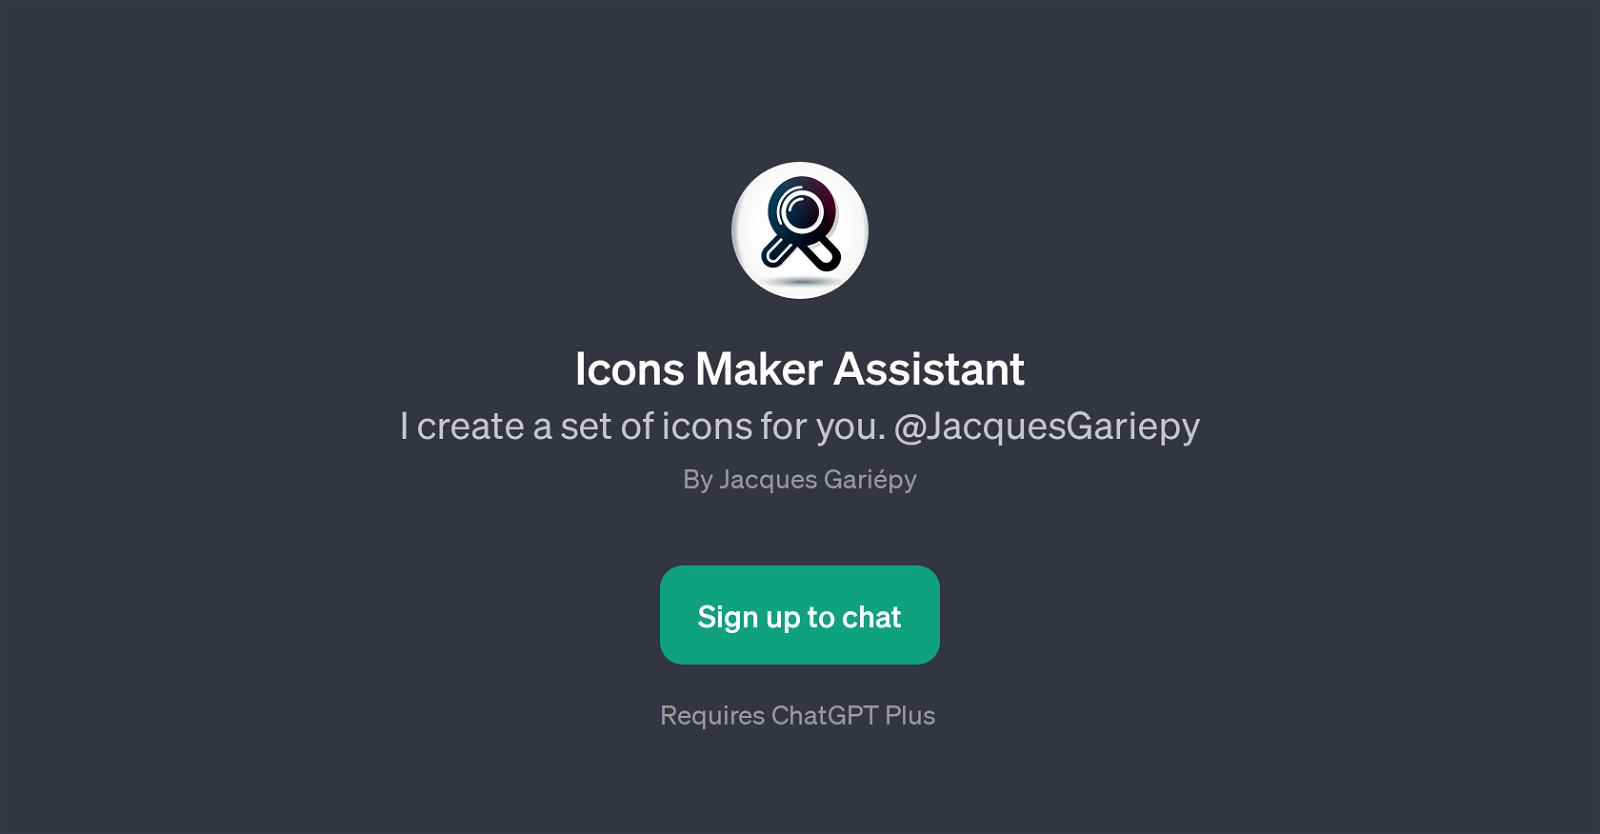 Icons Maker Assistant website